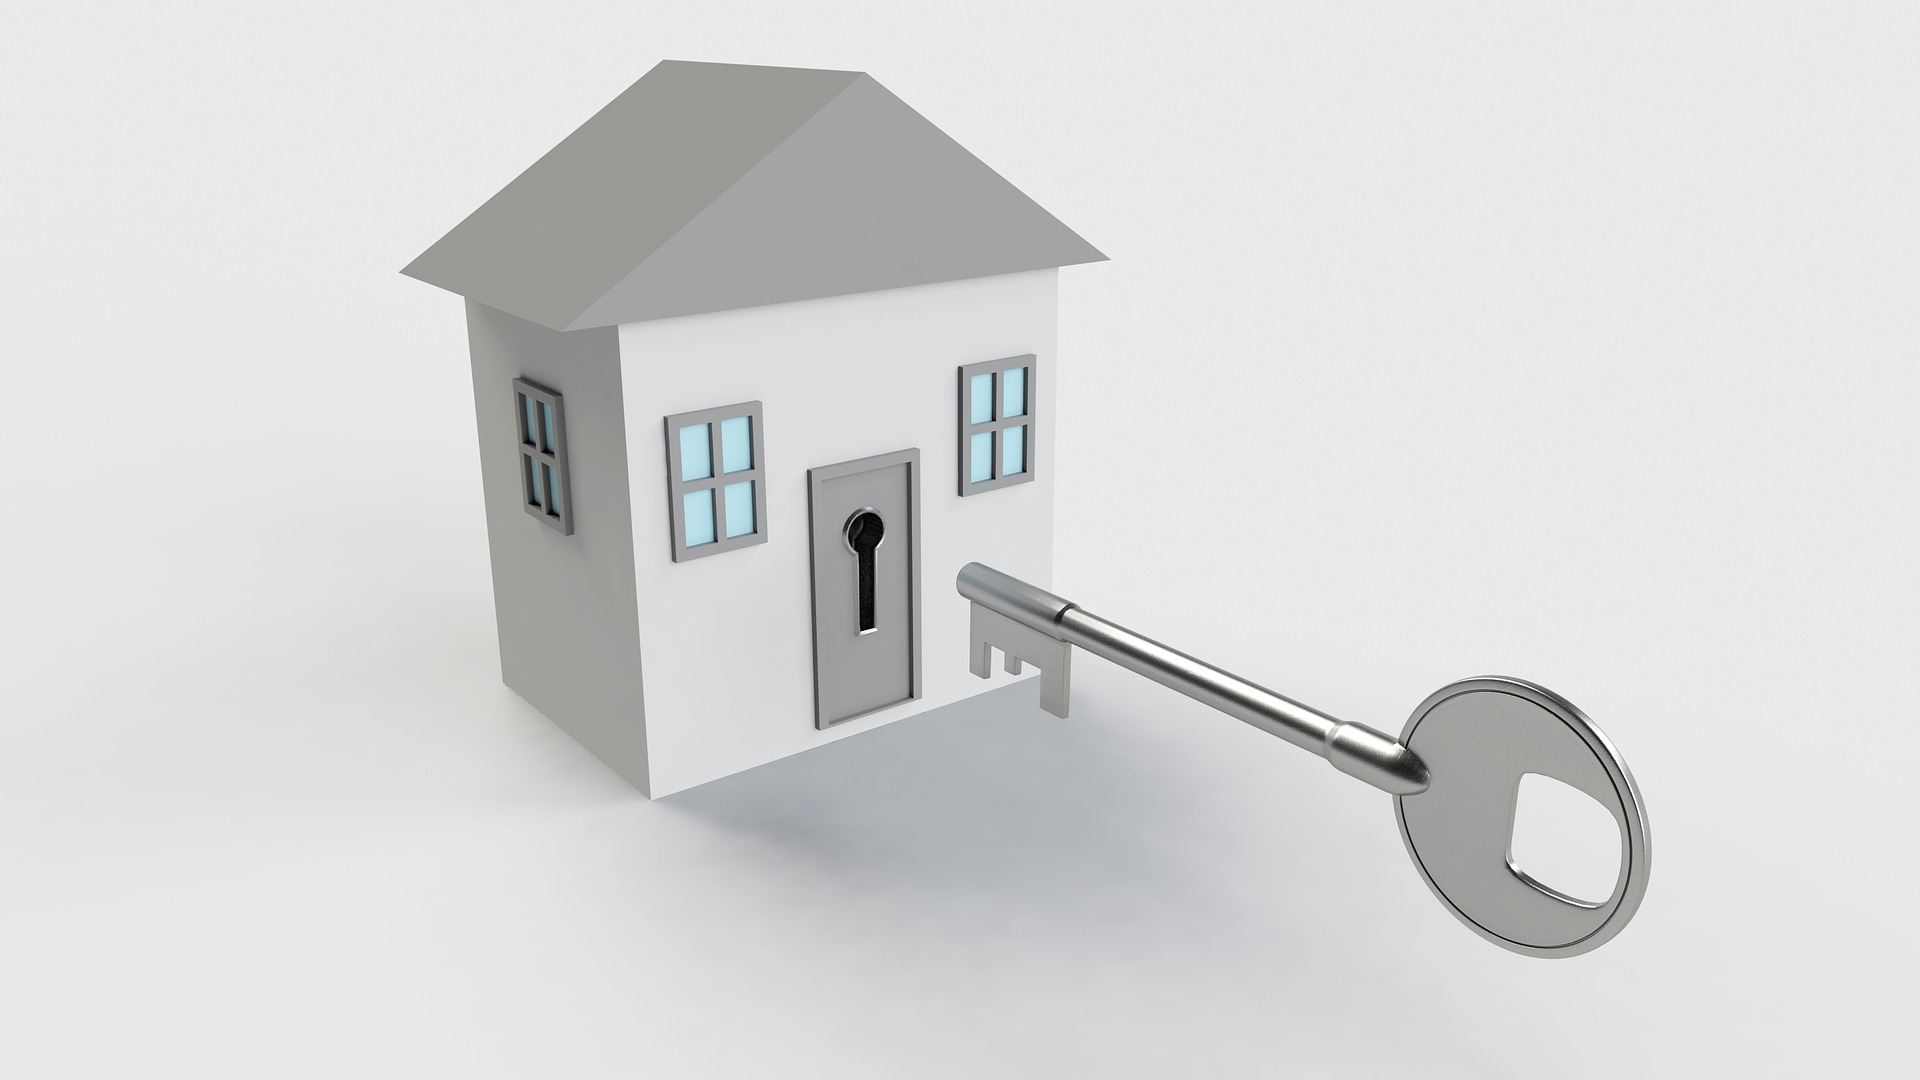 Preventing residential burglary through good planning